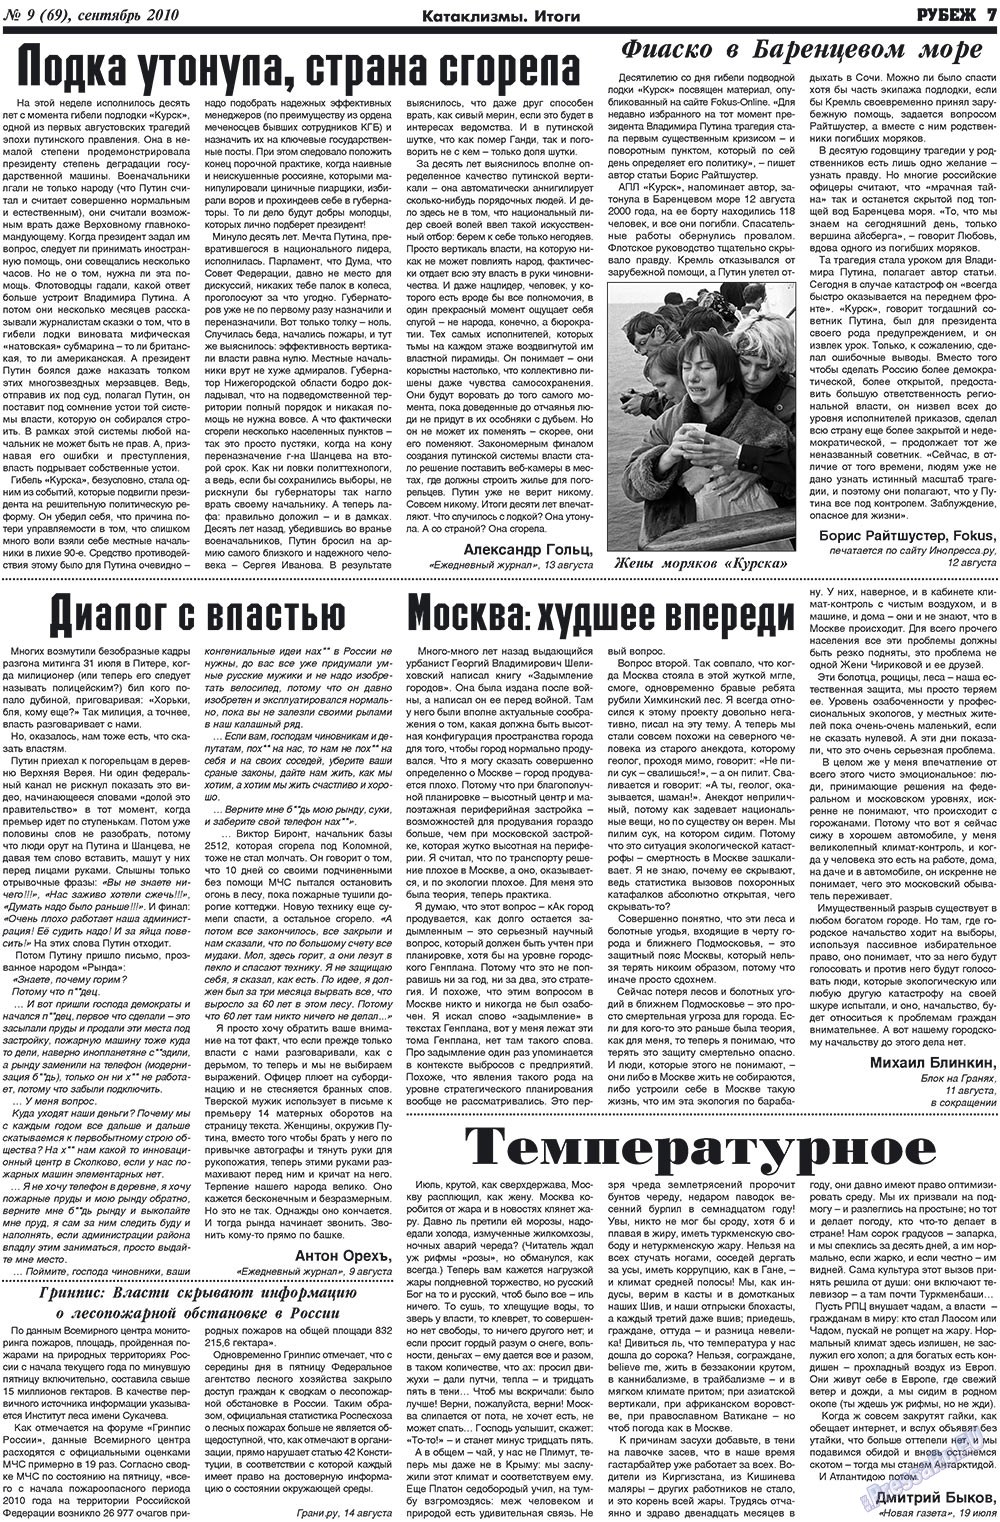 Рубеж, газета. 2010 №9 стр.7